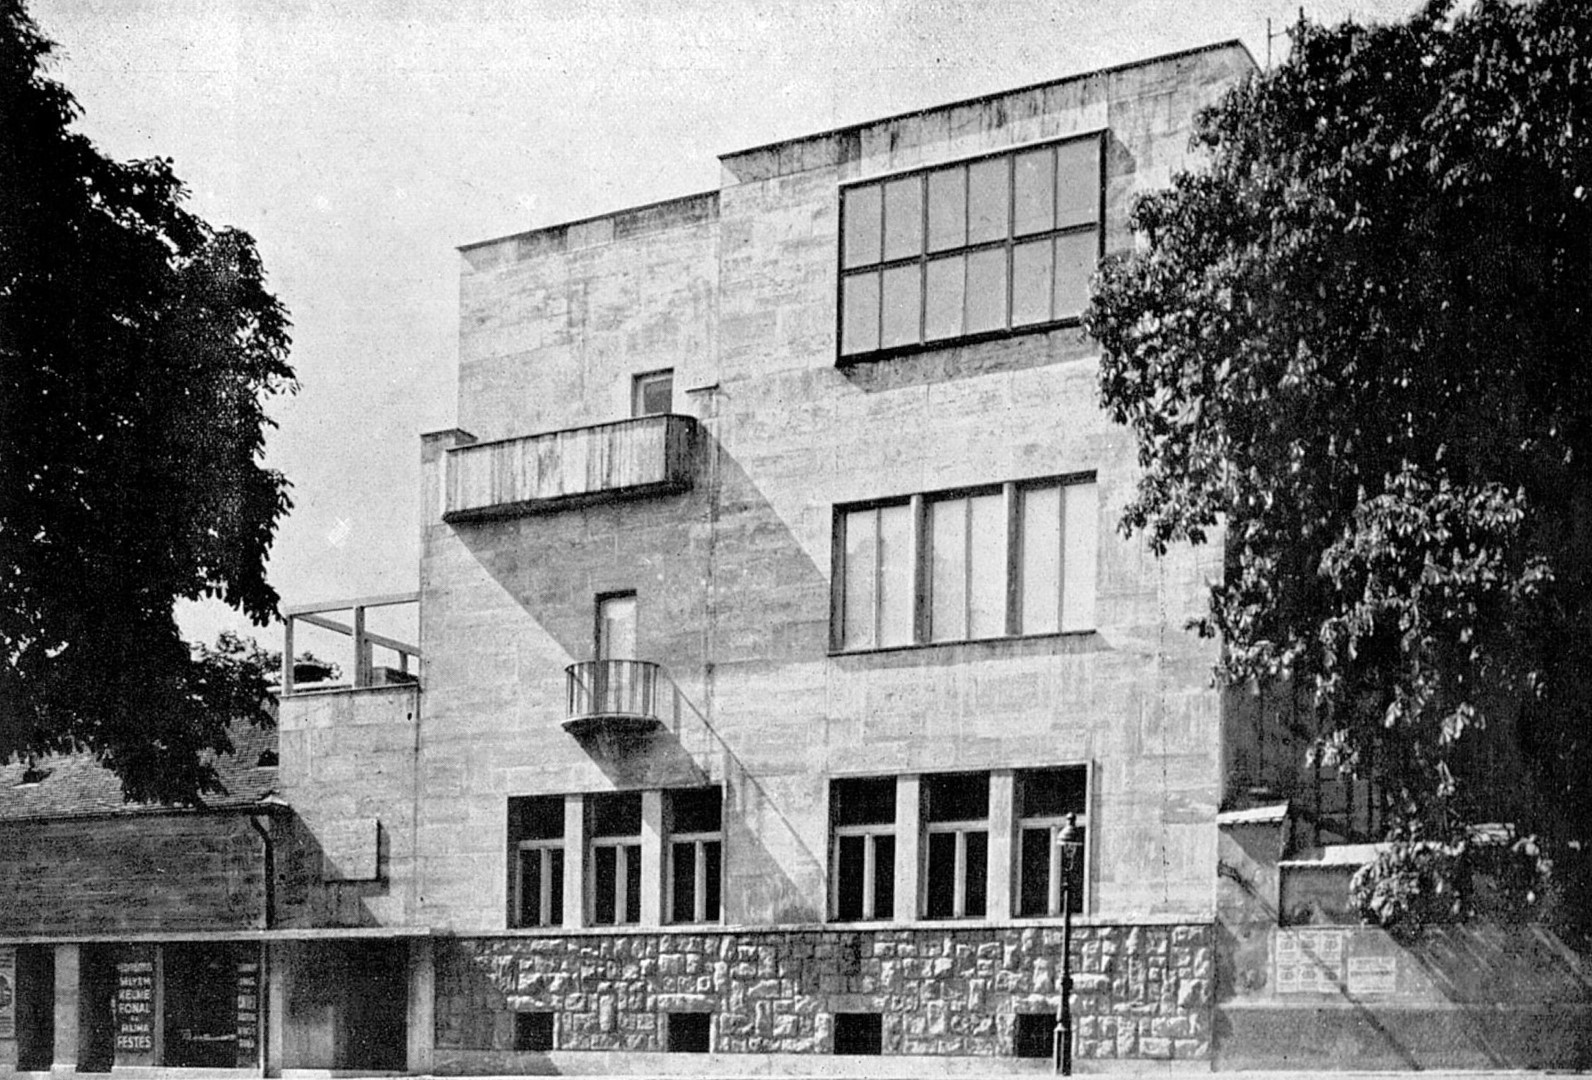 Basch-ház, Városmajor utca (Larchitecture dAujourdhui, 1935)